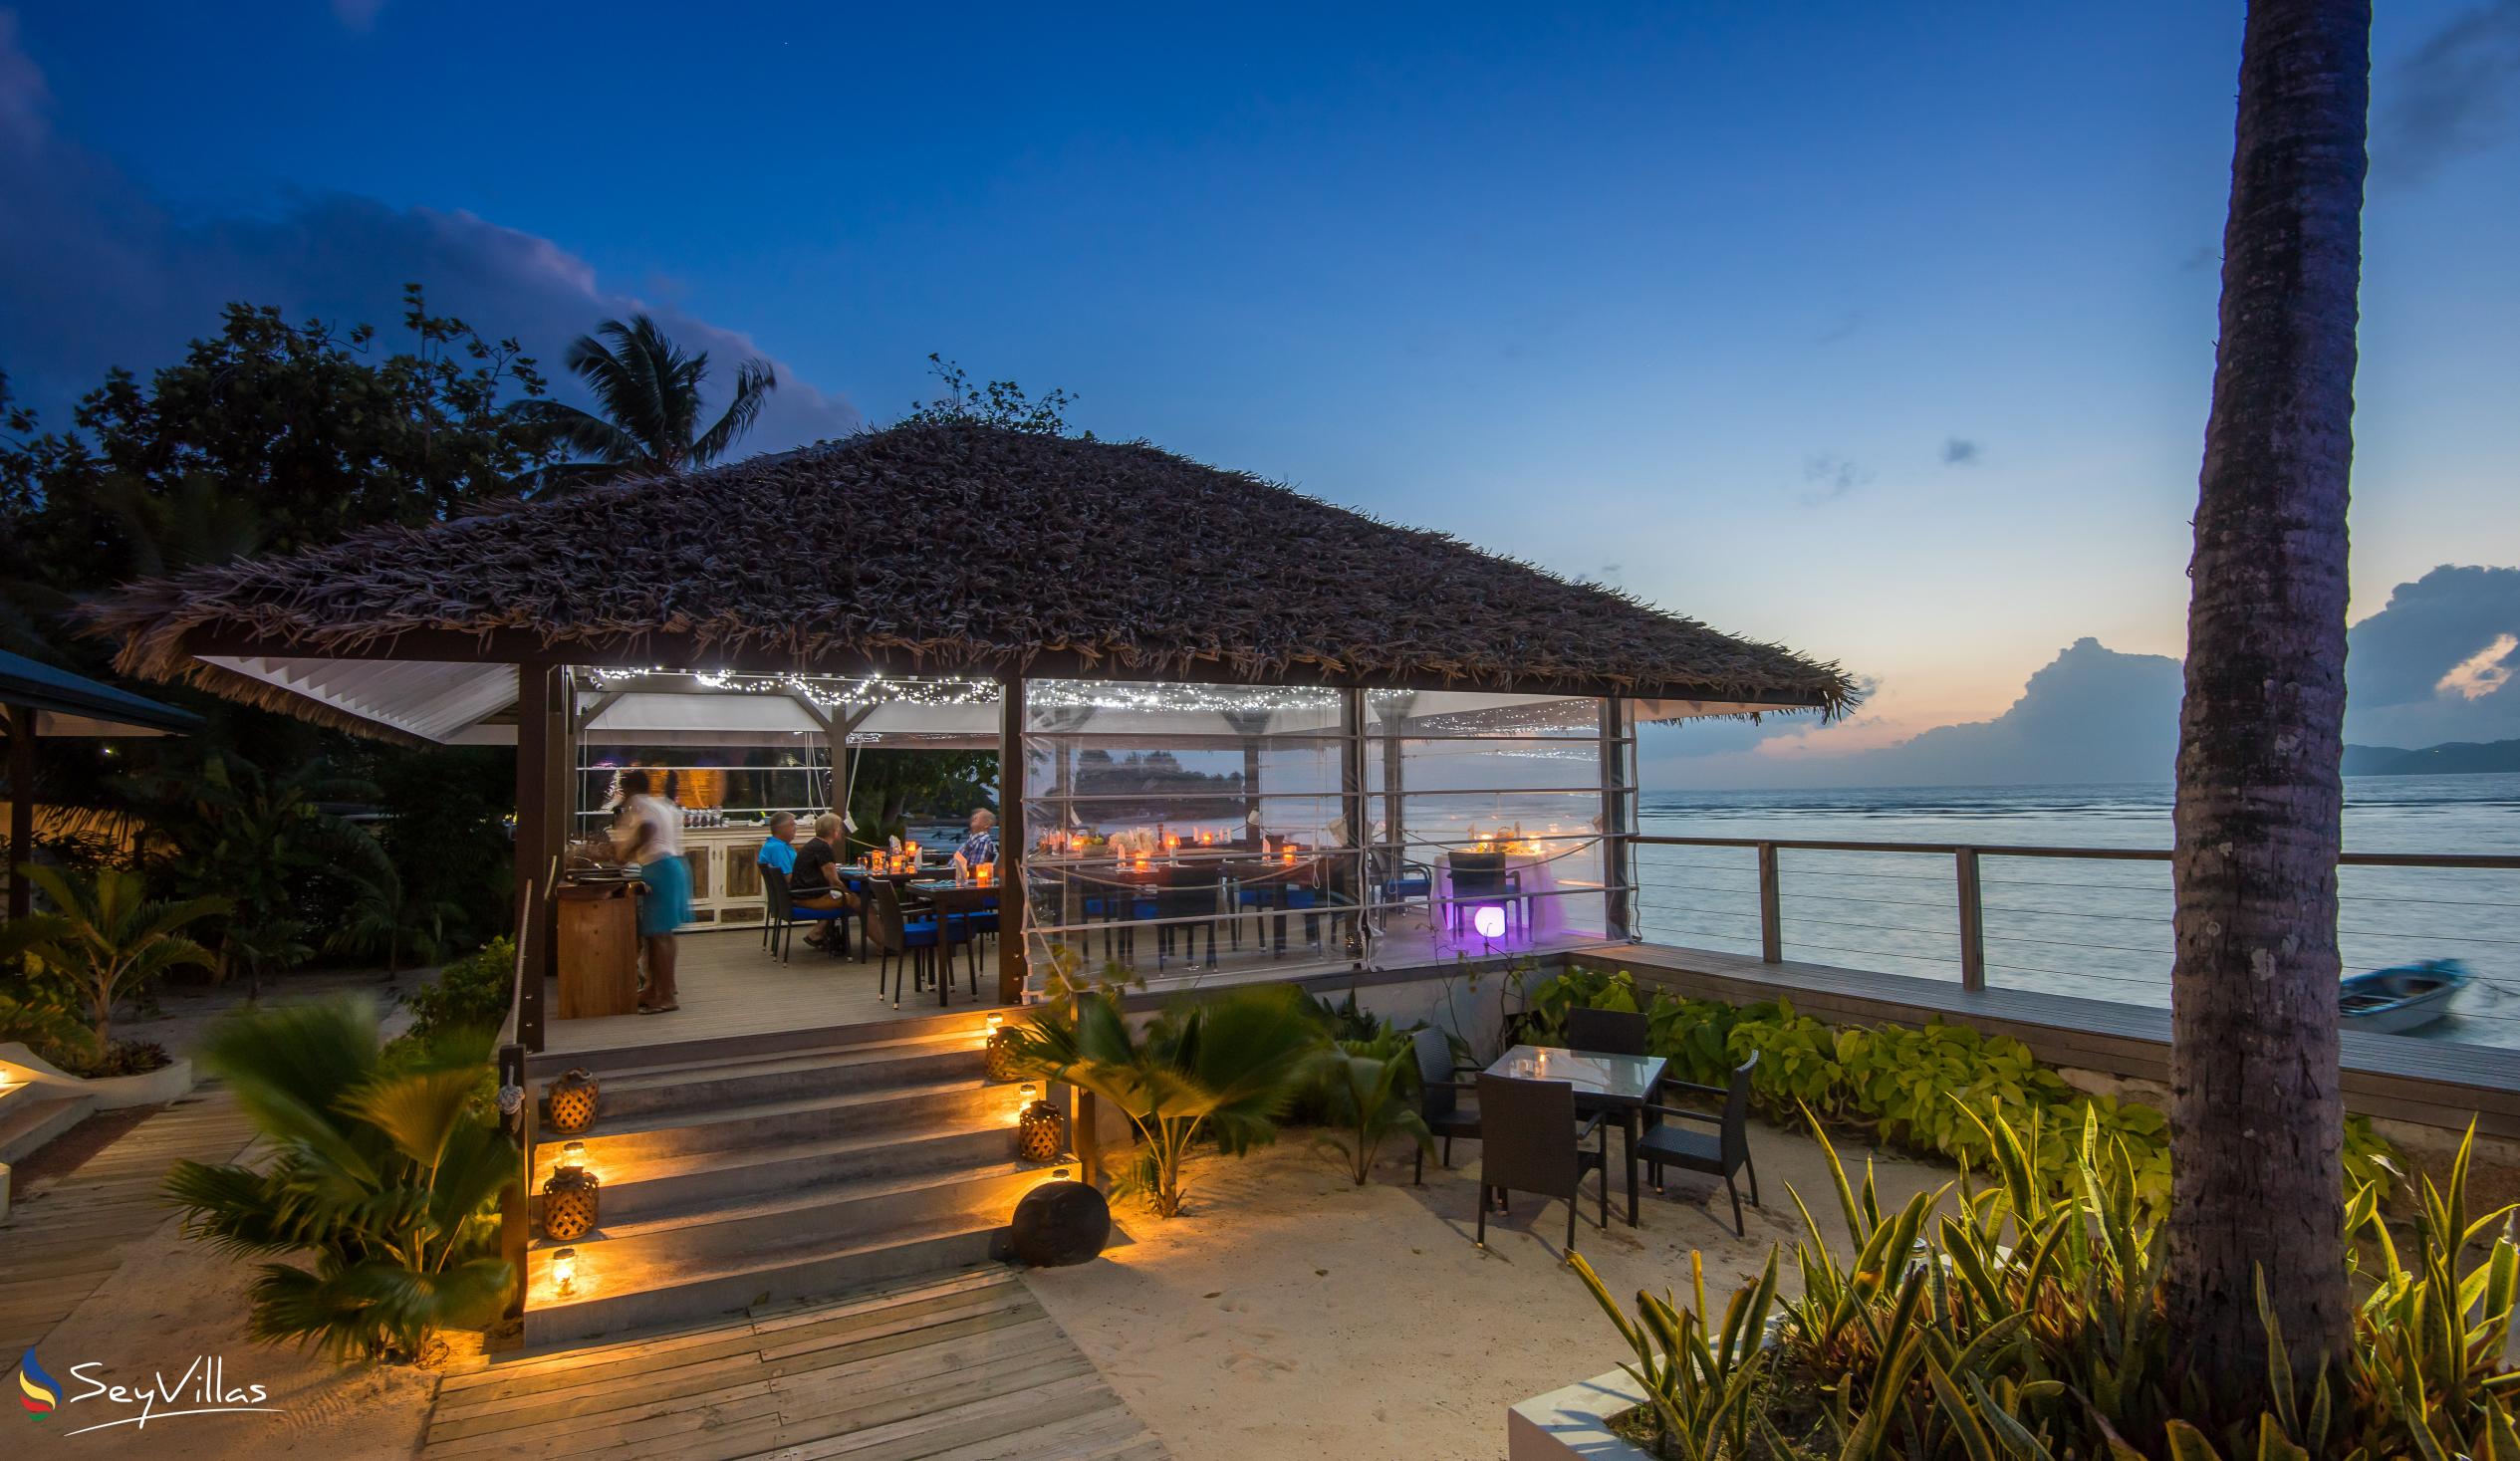 Foto 39: Le Nautique Luxury Waterfront Hotel - Innenbereich - La Digue (Seychellen)